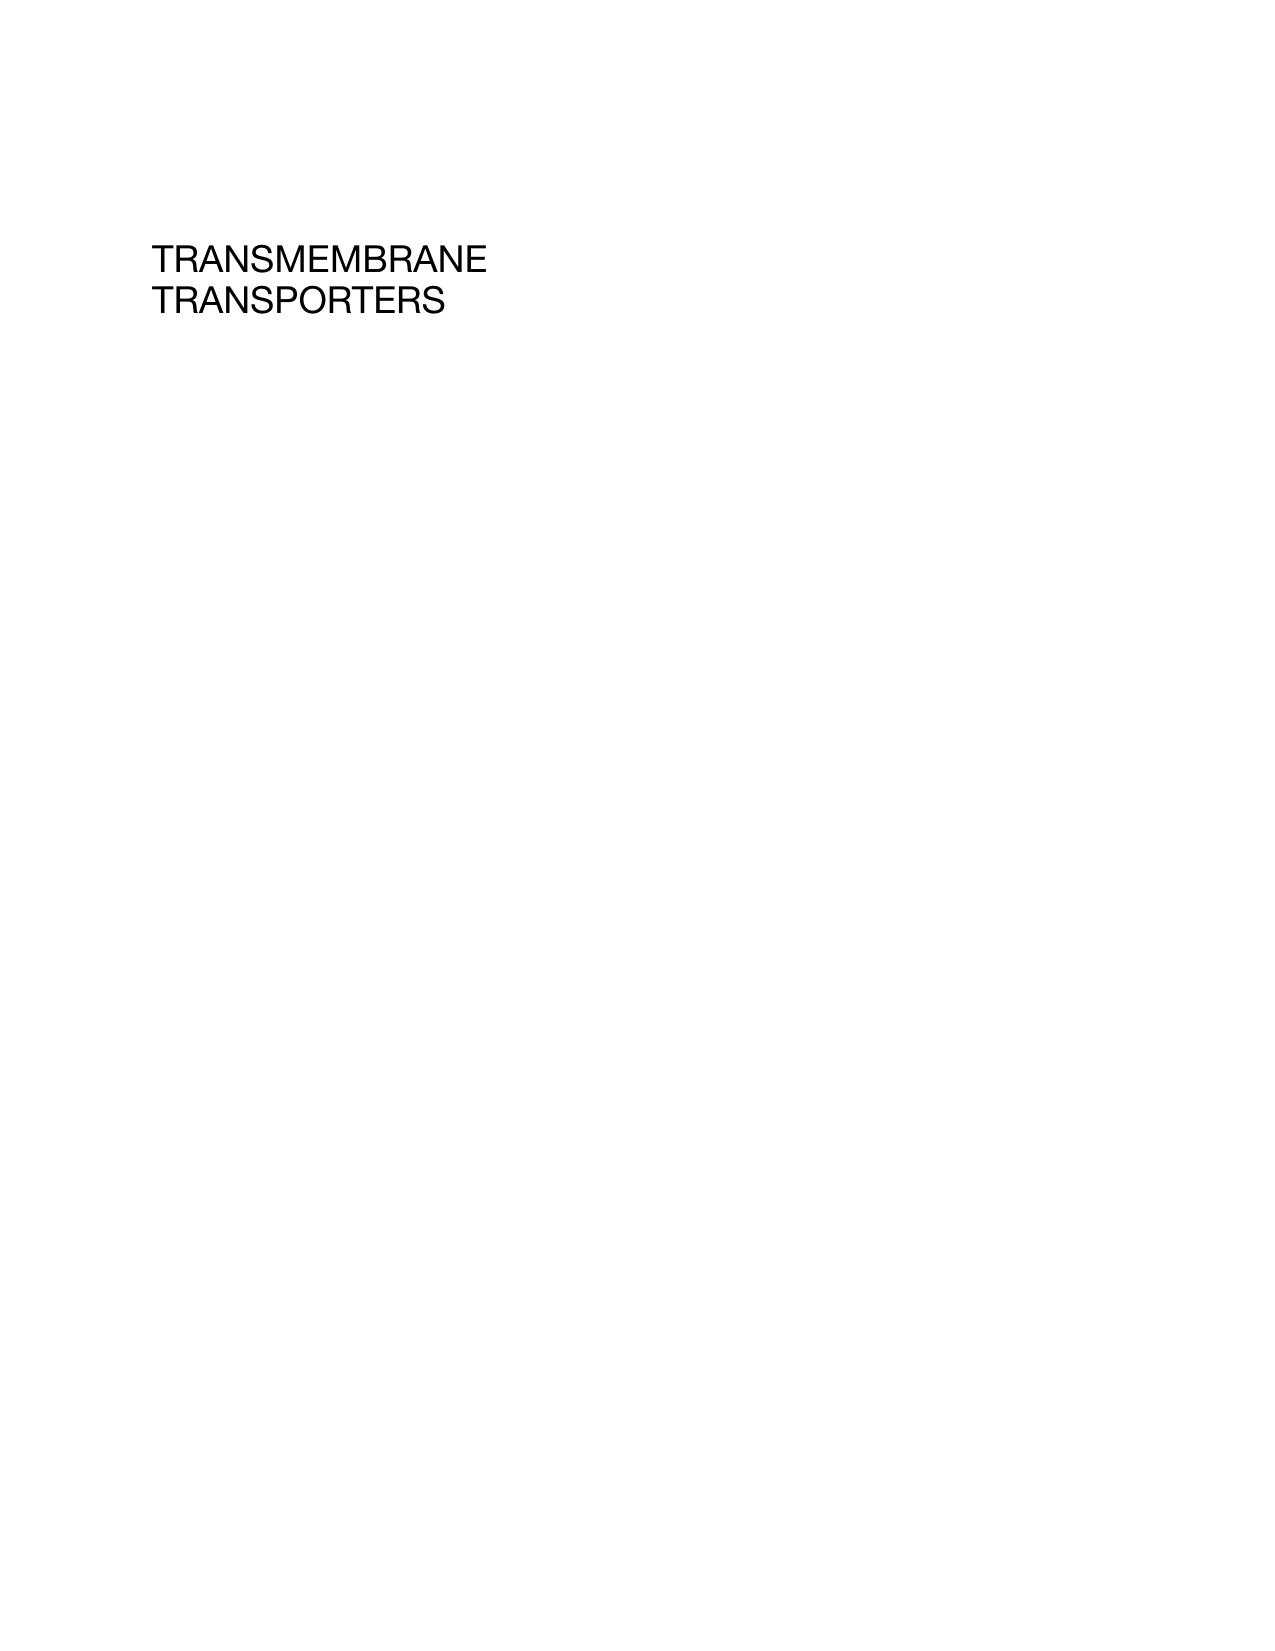 TRANSMEMBRANE TRANSPORTERS 2002